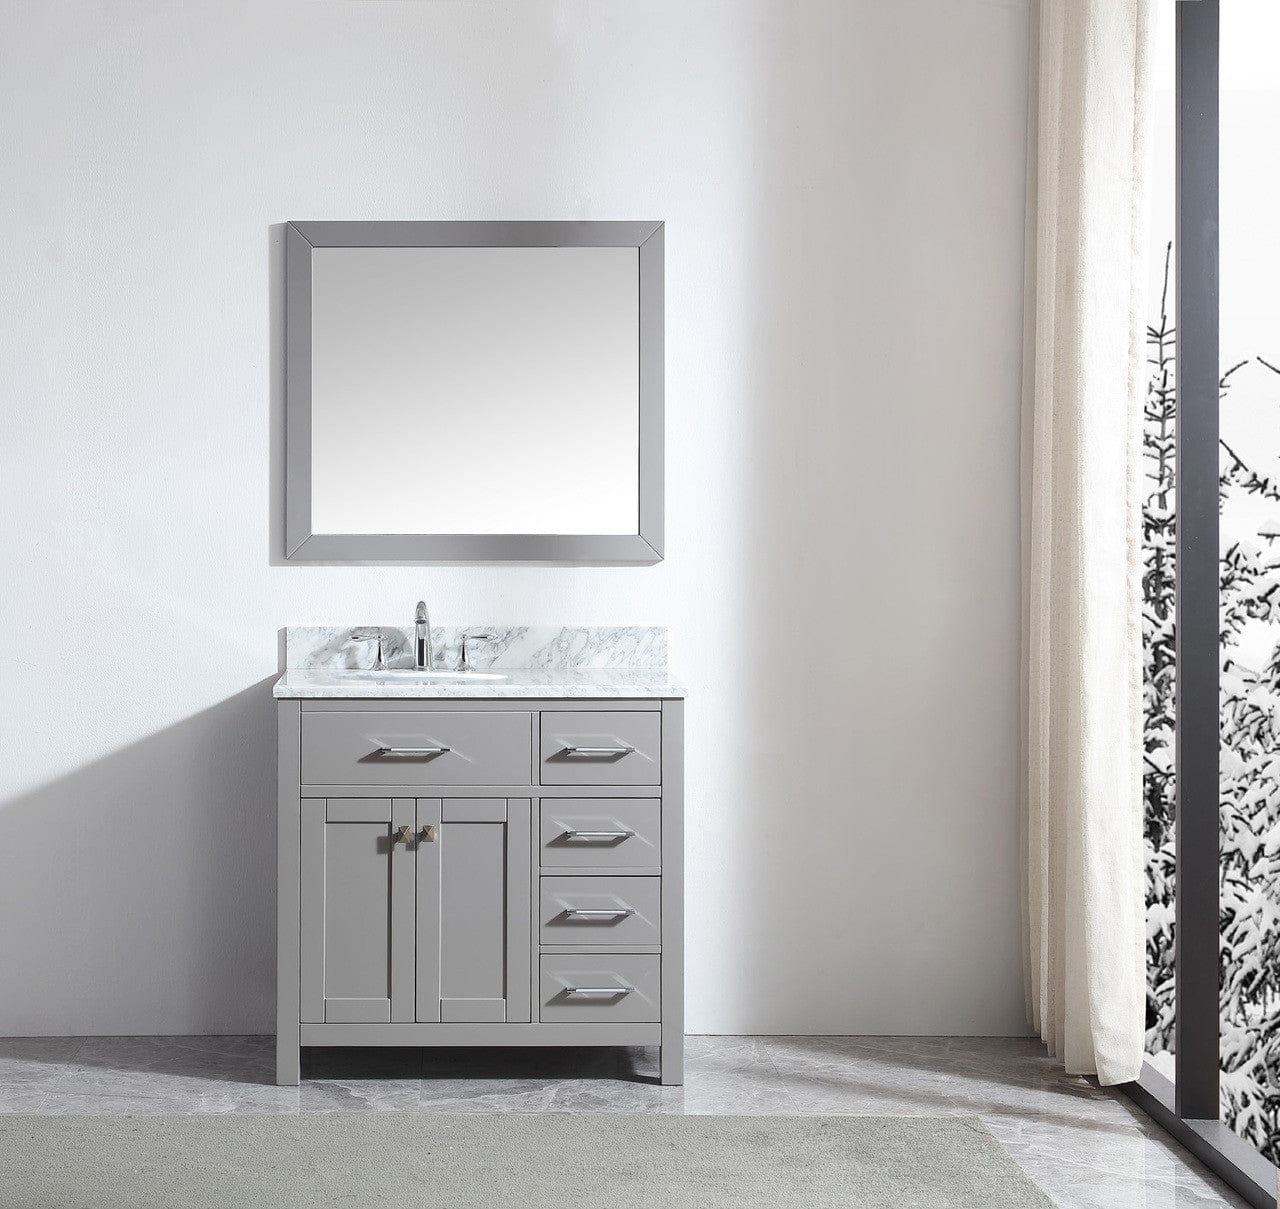 Virtu USA Caroline Parkway 36 Single Bathroom Vanity in Cashmere Grey - Rightside basin w/ Marble Top & Round Sink